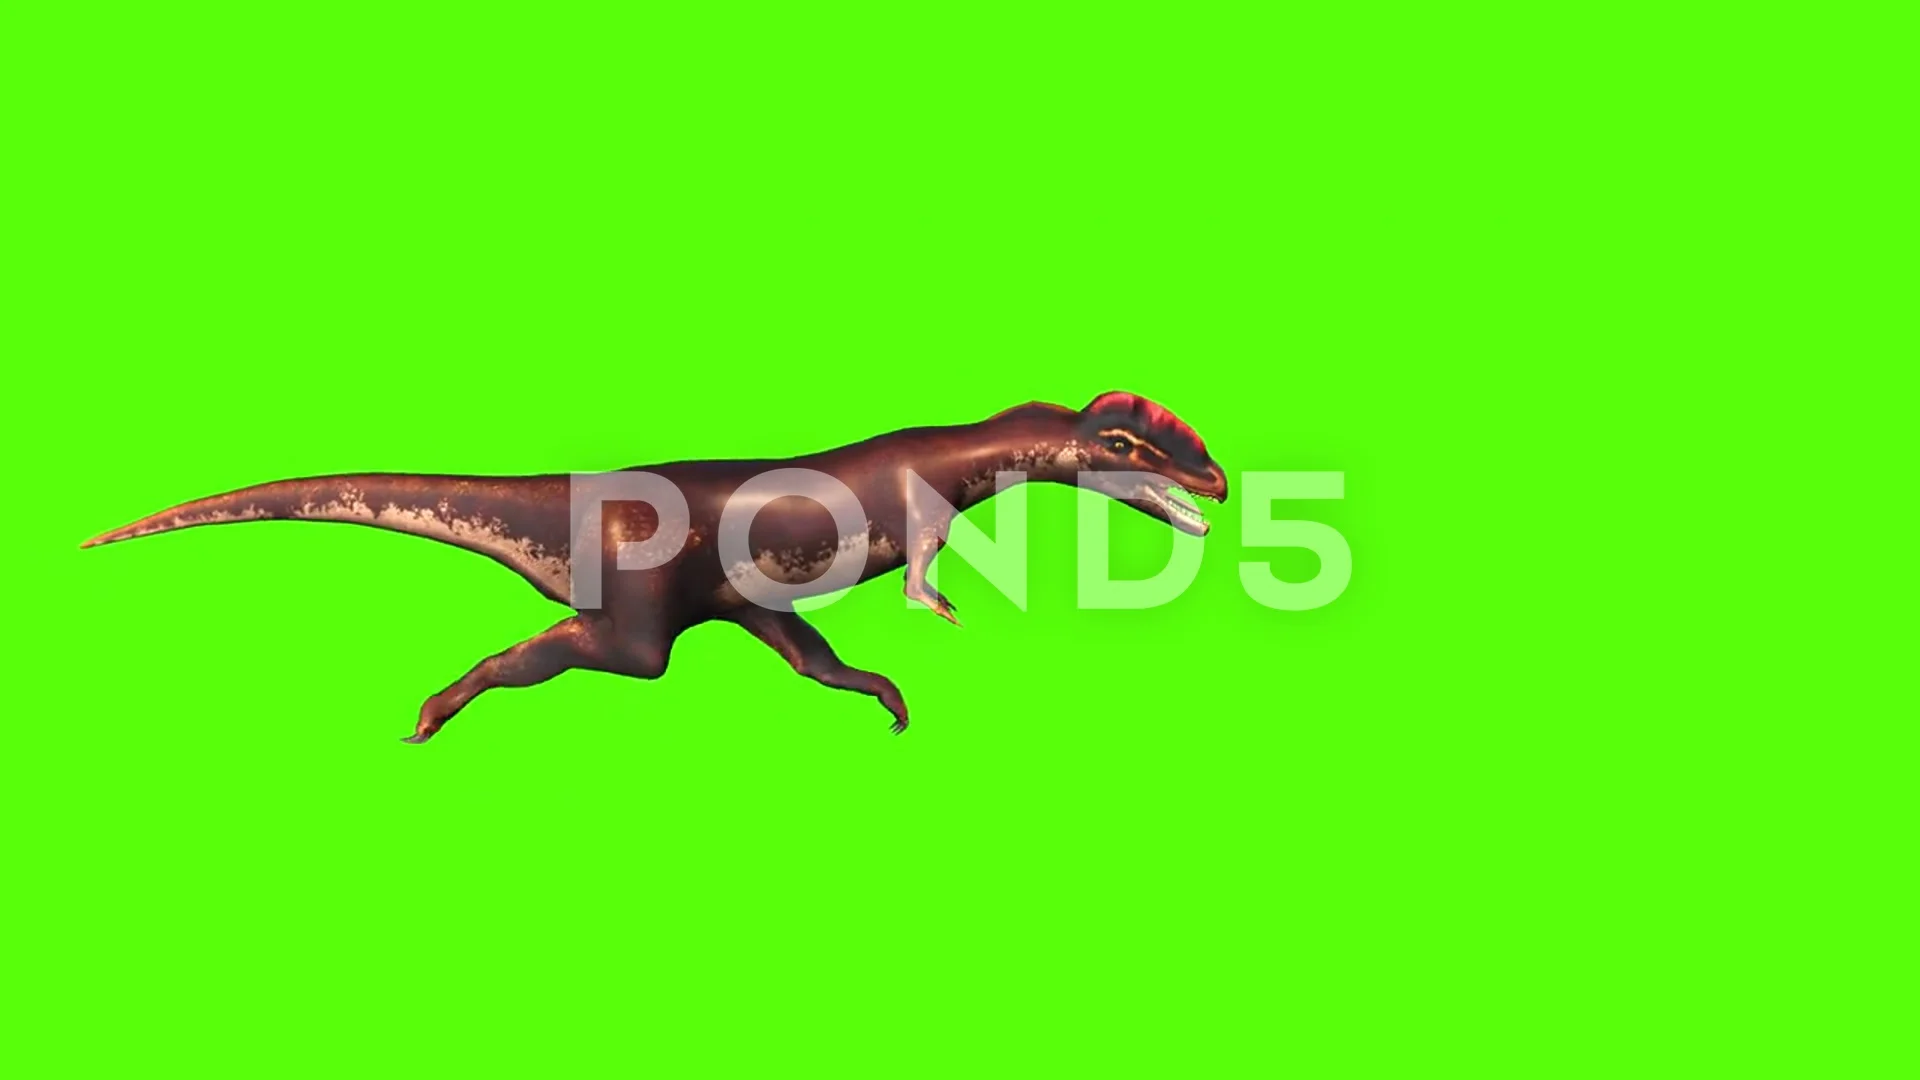 Animate Running Dinosaur Tyrannosaurus Rex 3d Stock Footage Video (100%  Royalty-free) 1012228994